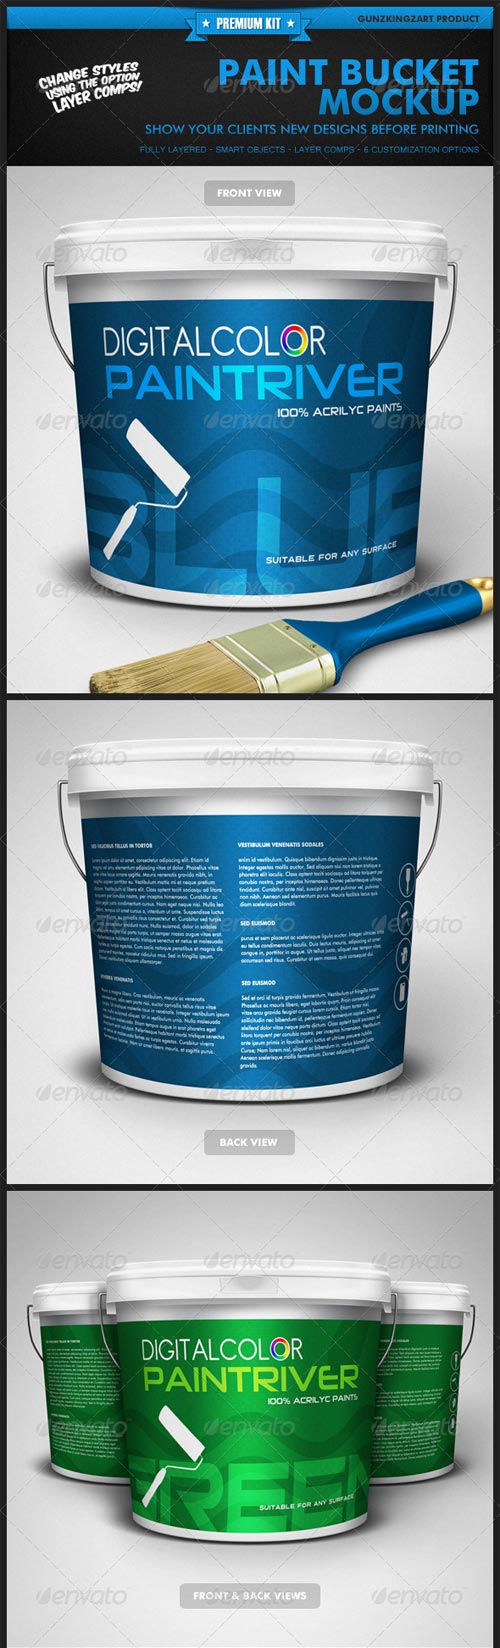  - Paint Bucket Mockup - Premium Kit - GraphicRiver